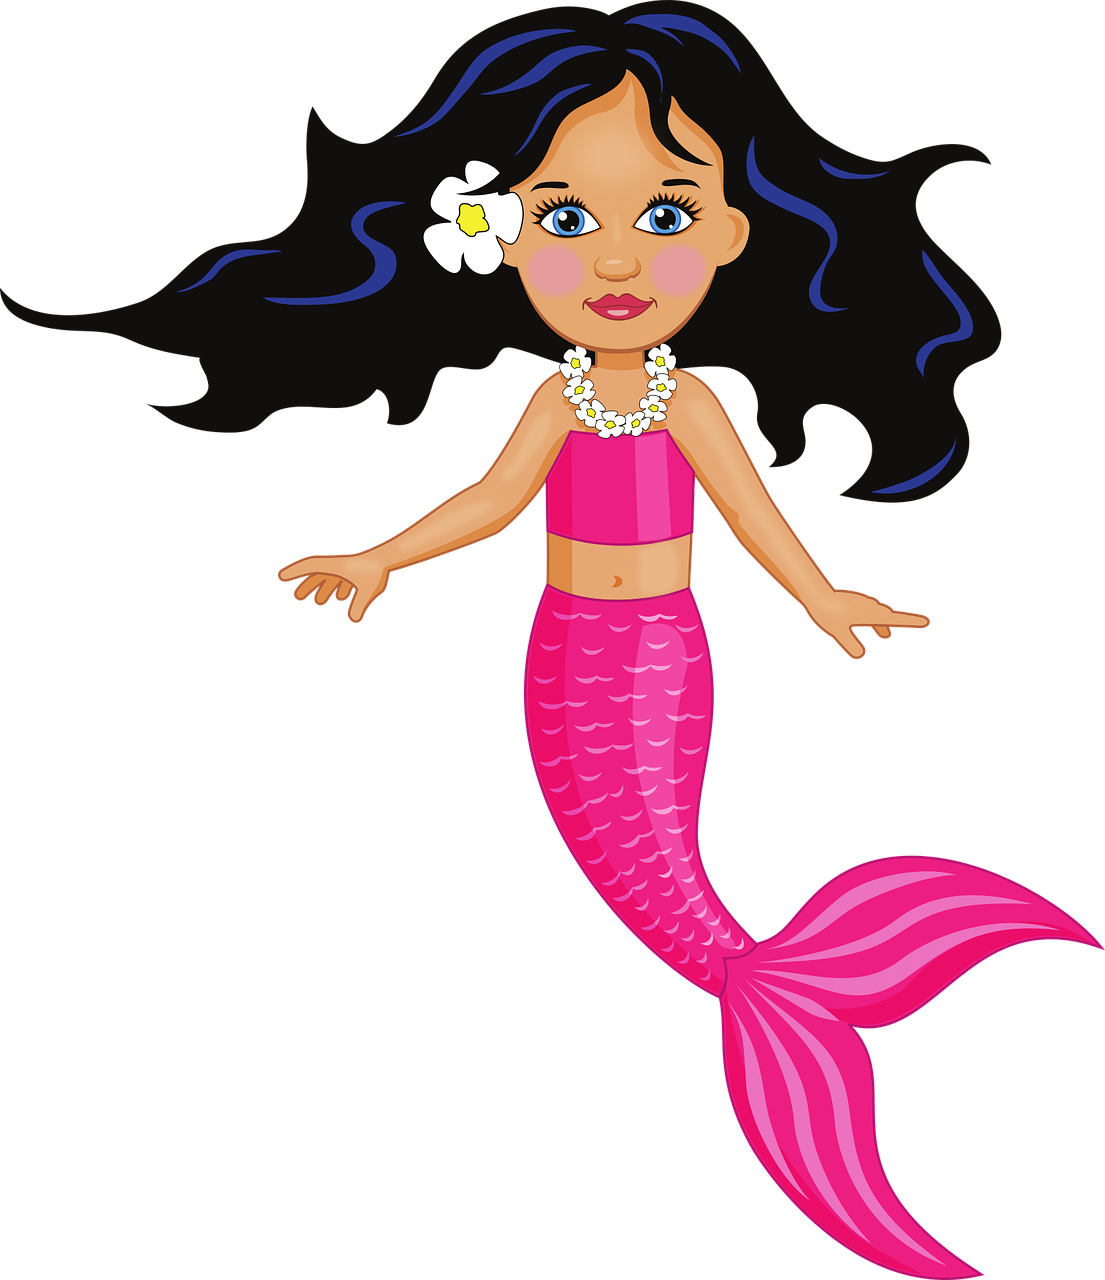 Cartoon Mermaidwith Pink Tail